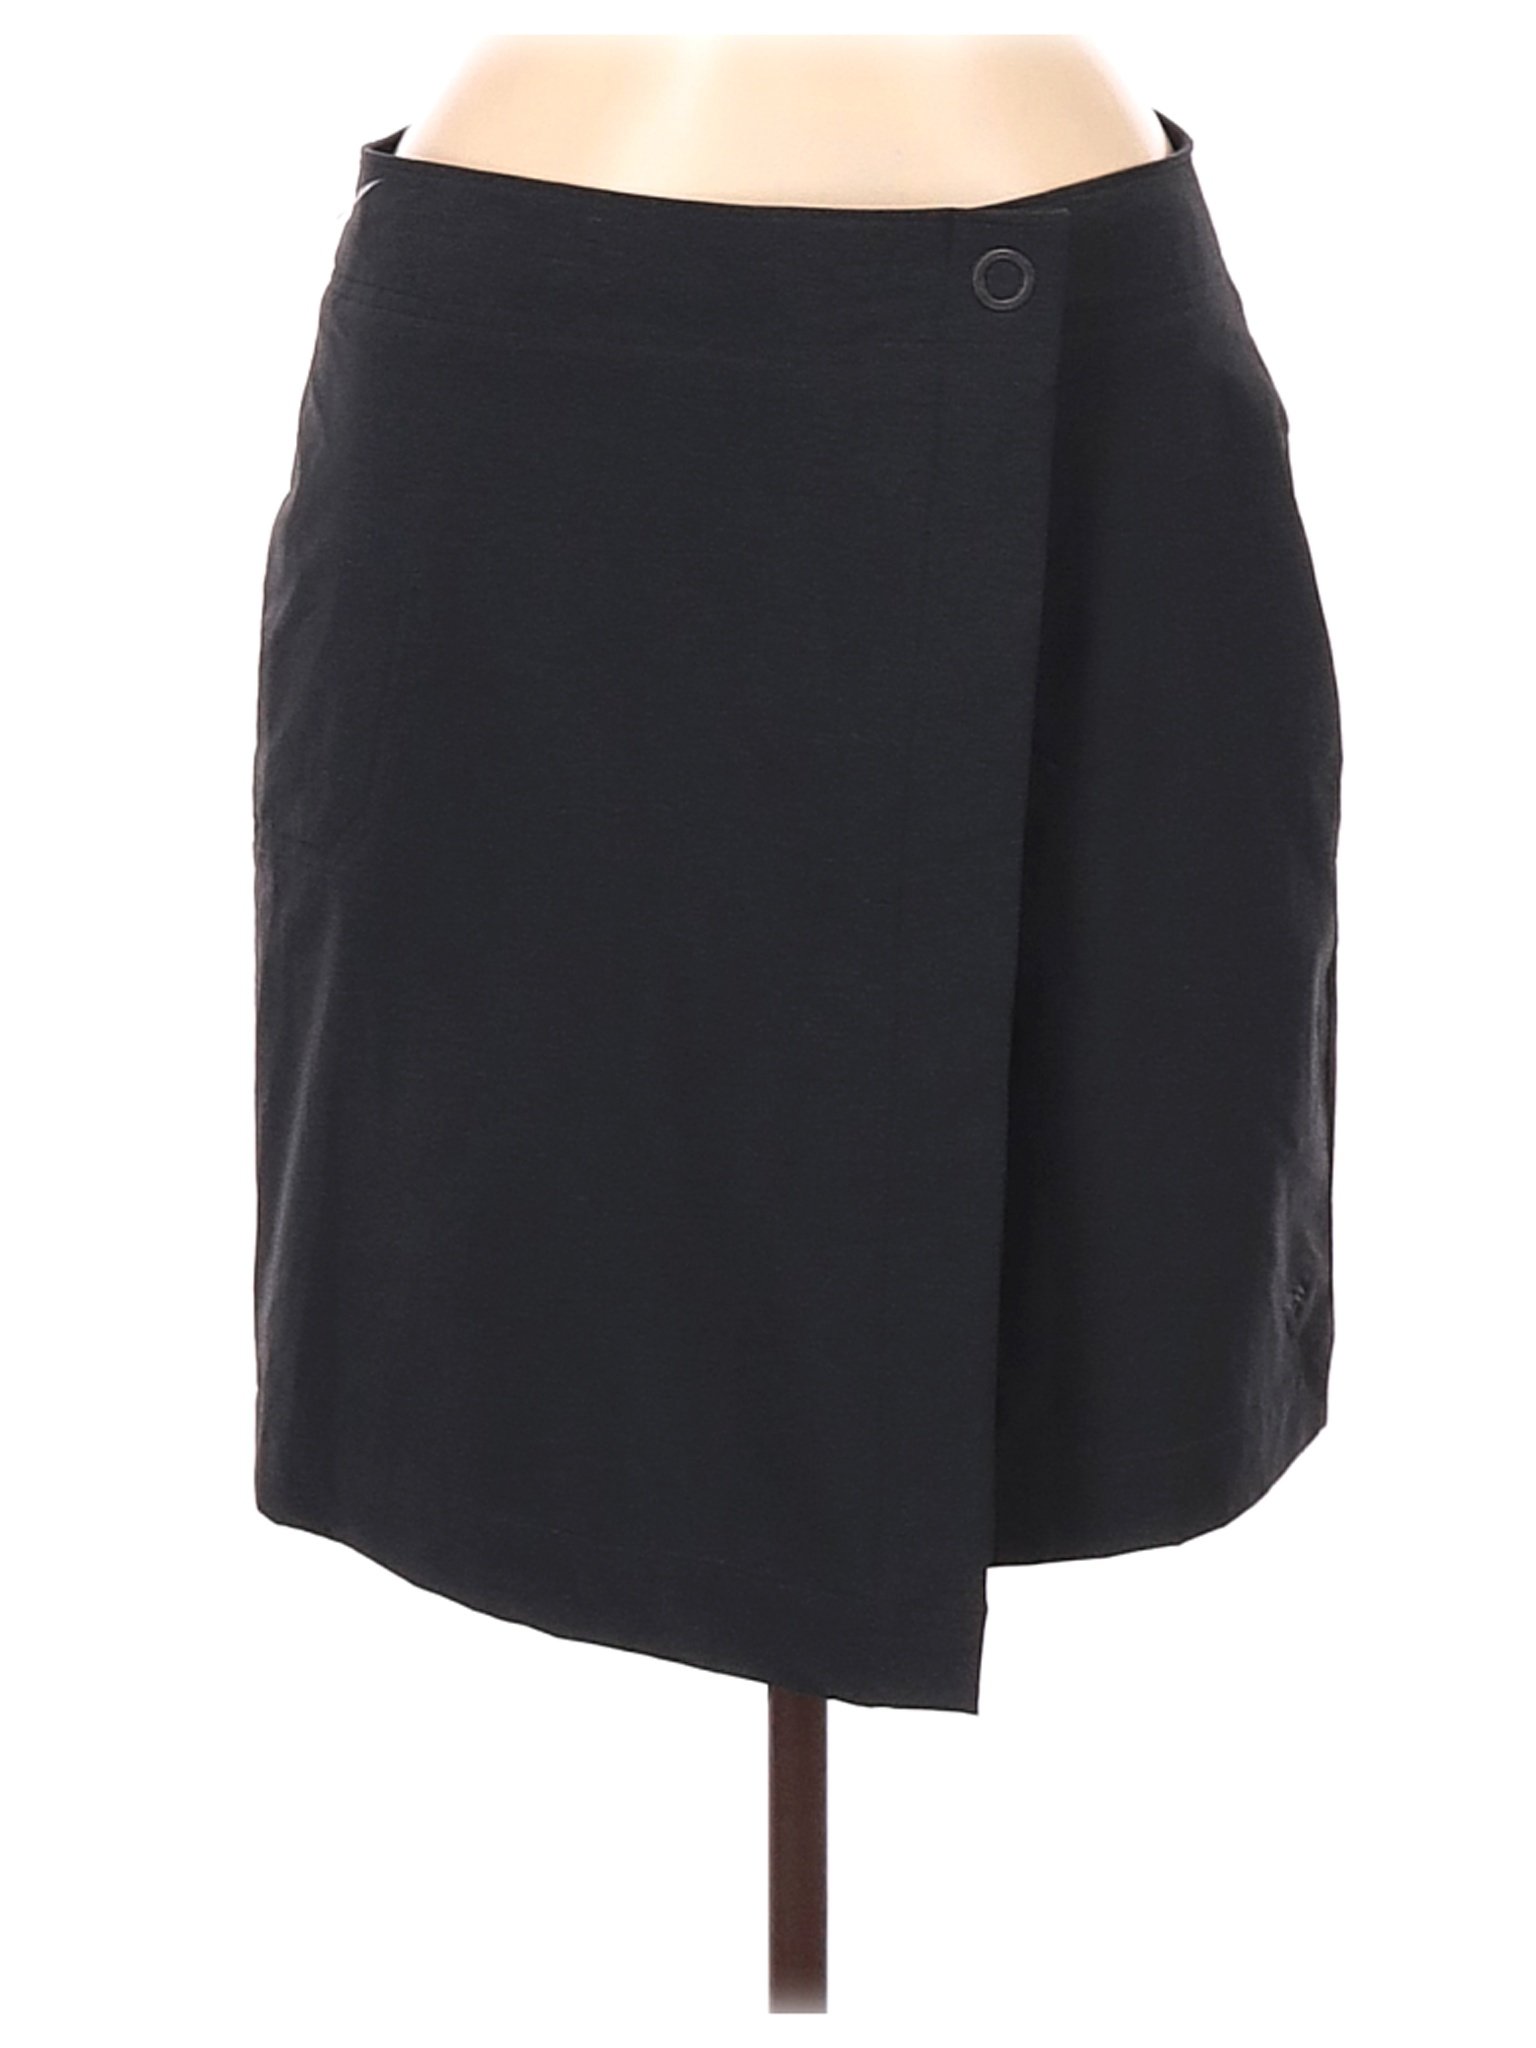 Columbia Women Black Active Skirt 4 | eBay